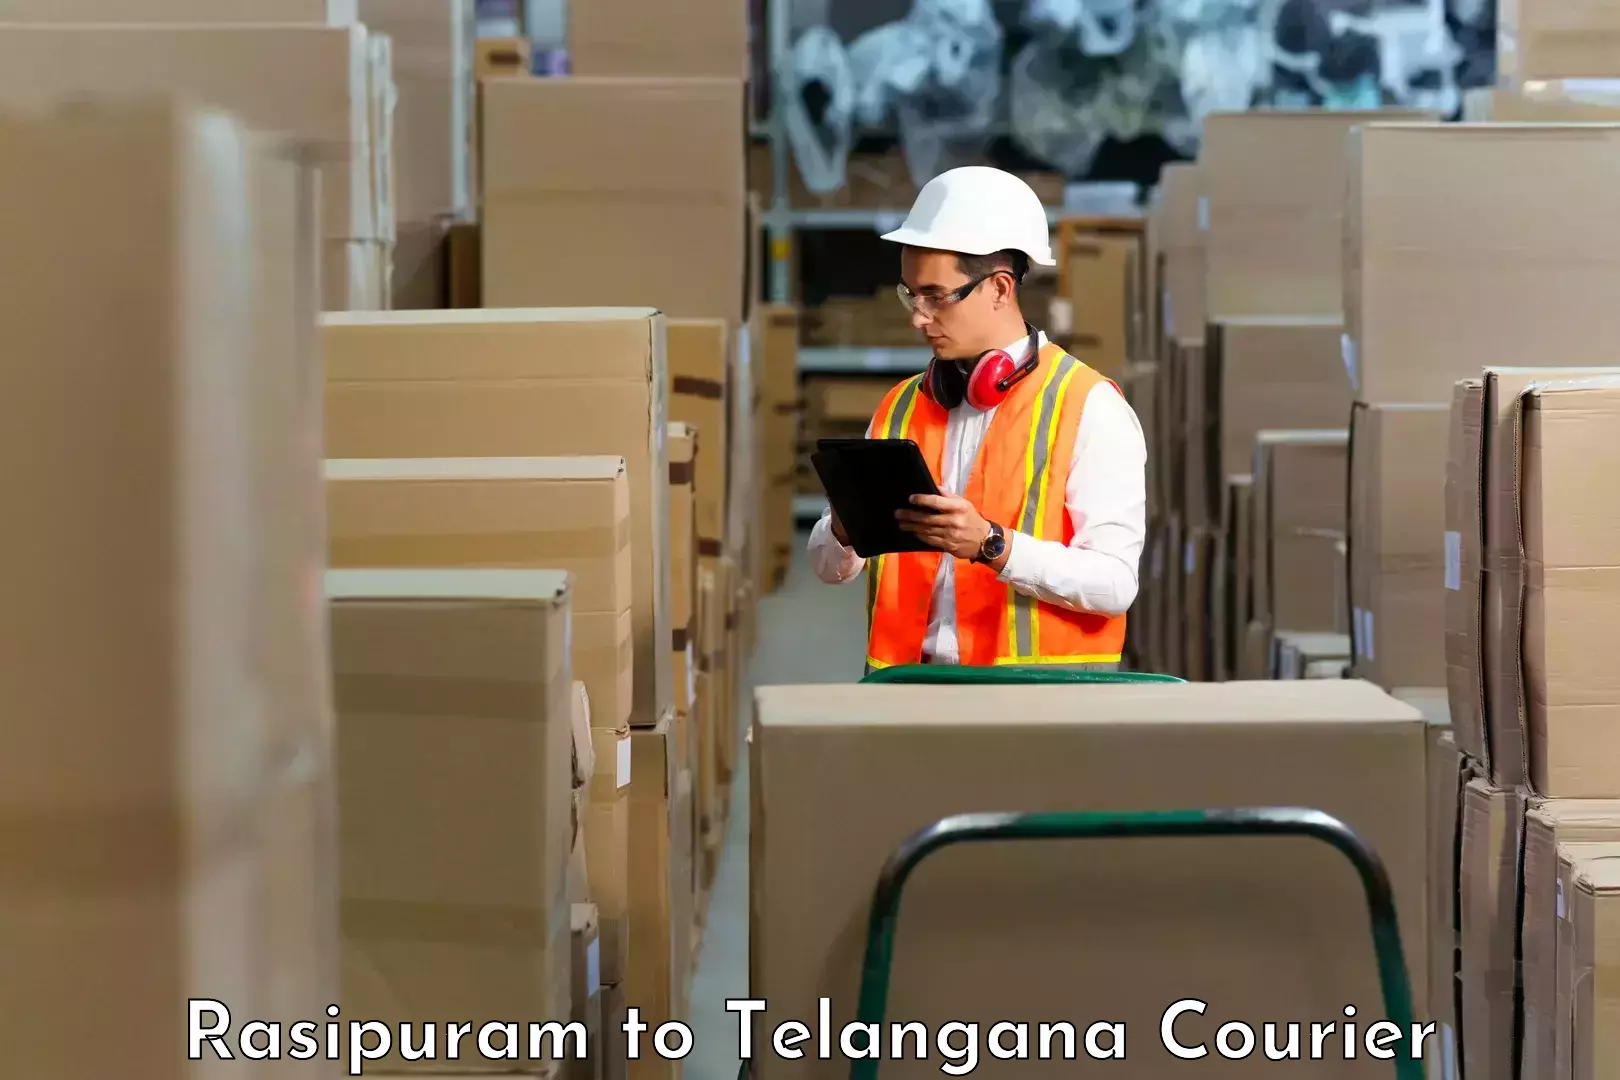 Professional courier handling Rasipuram to Manuguru